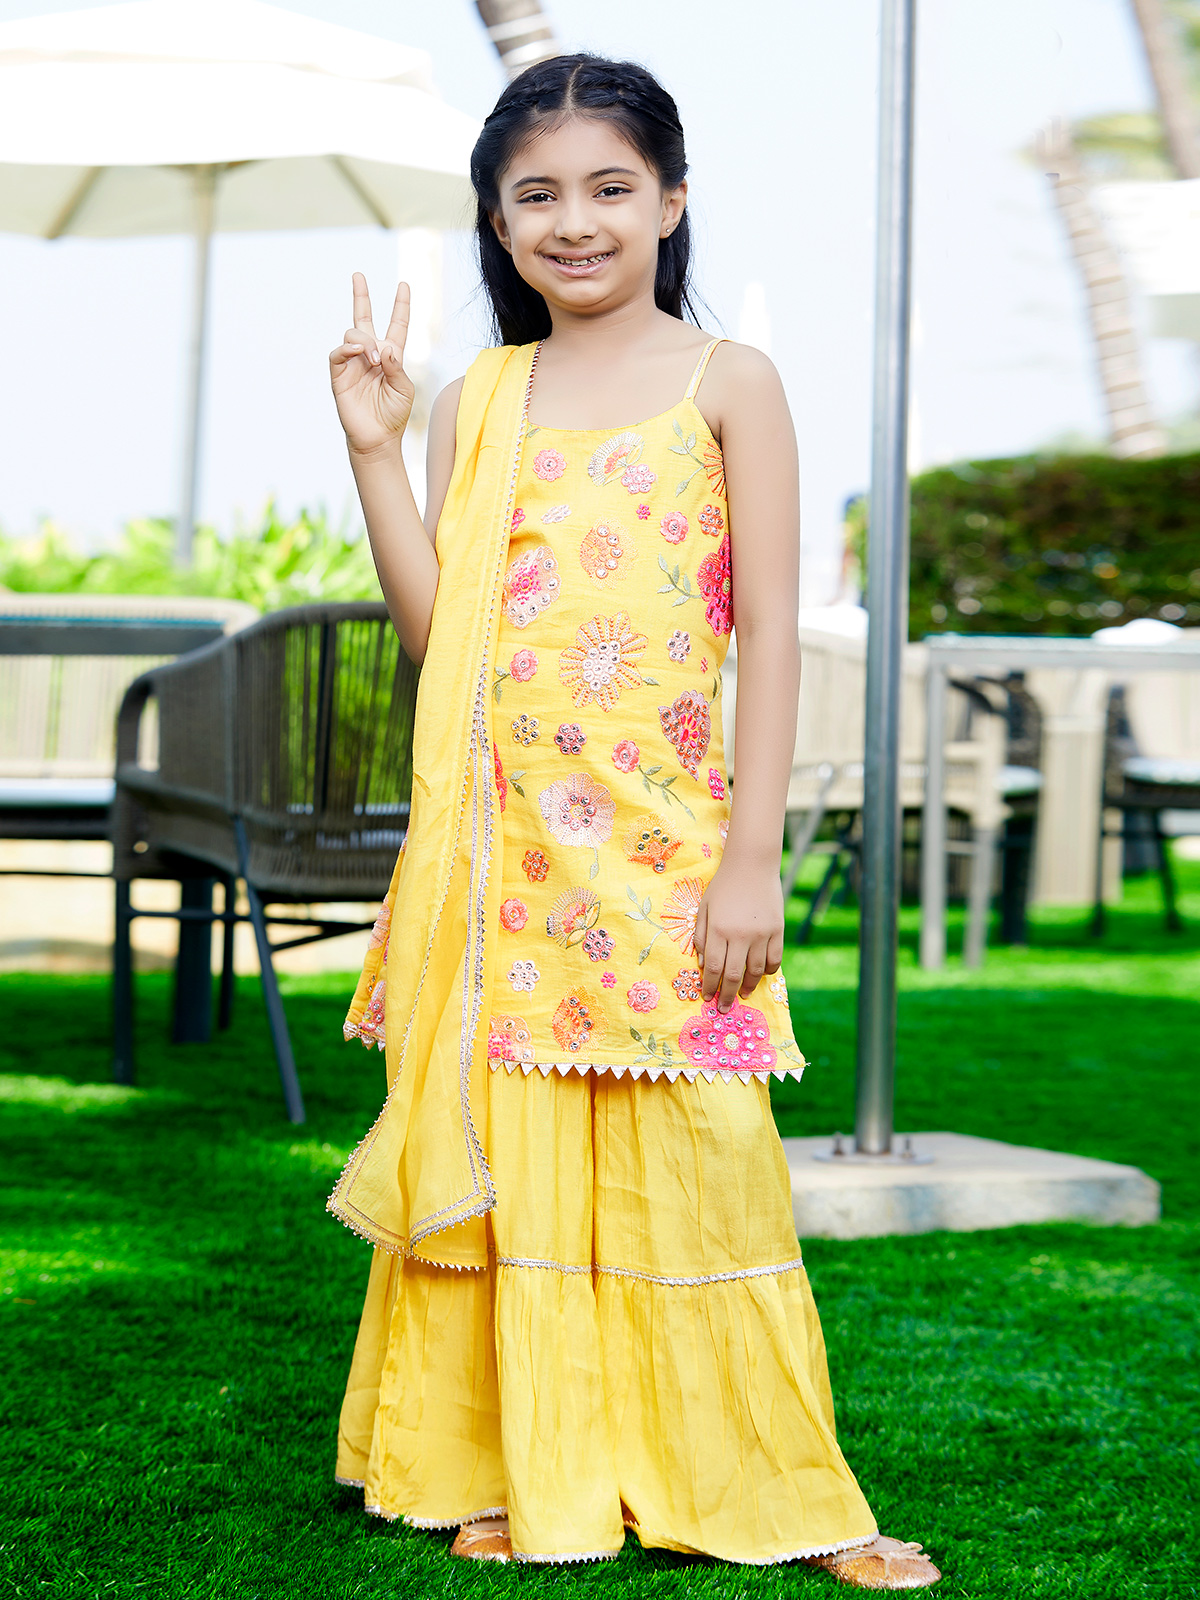 Partywear Bridal Yellow Salwar Kameez Kurta Sharara Plazo Pant Bottom Suit  Dress | eBay